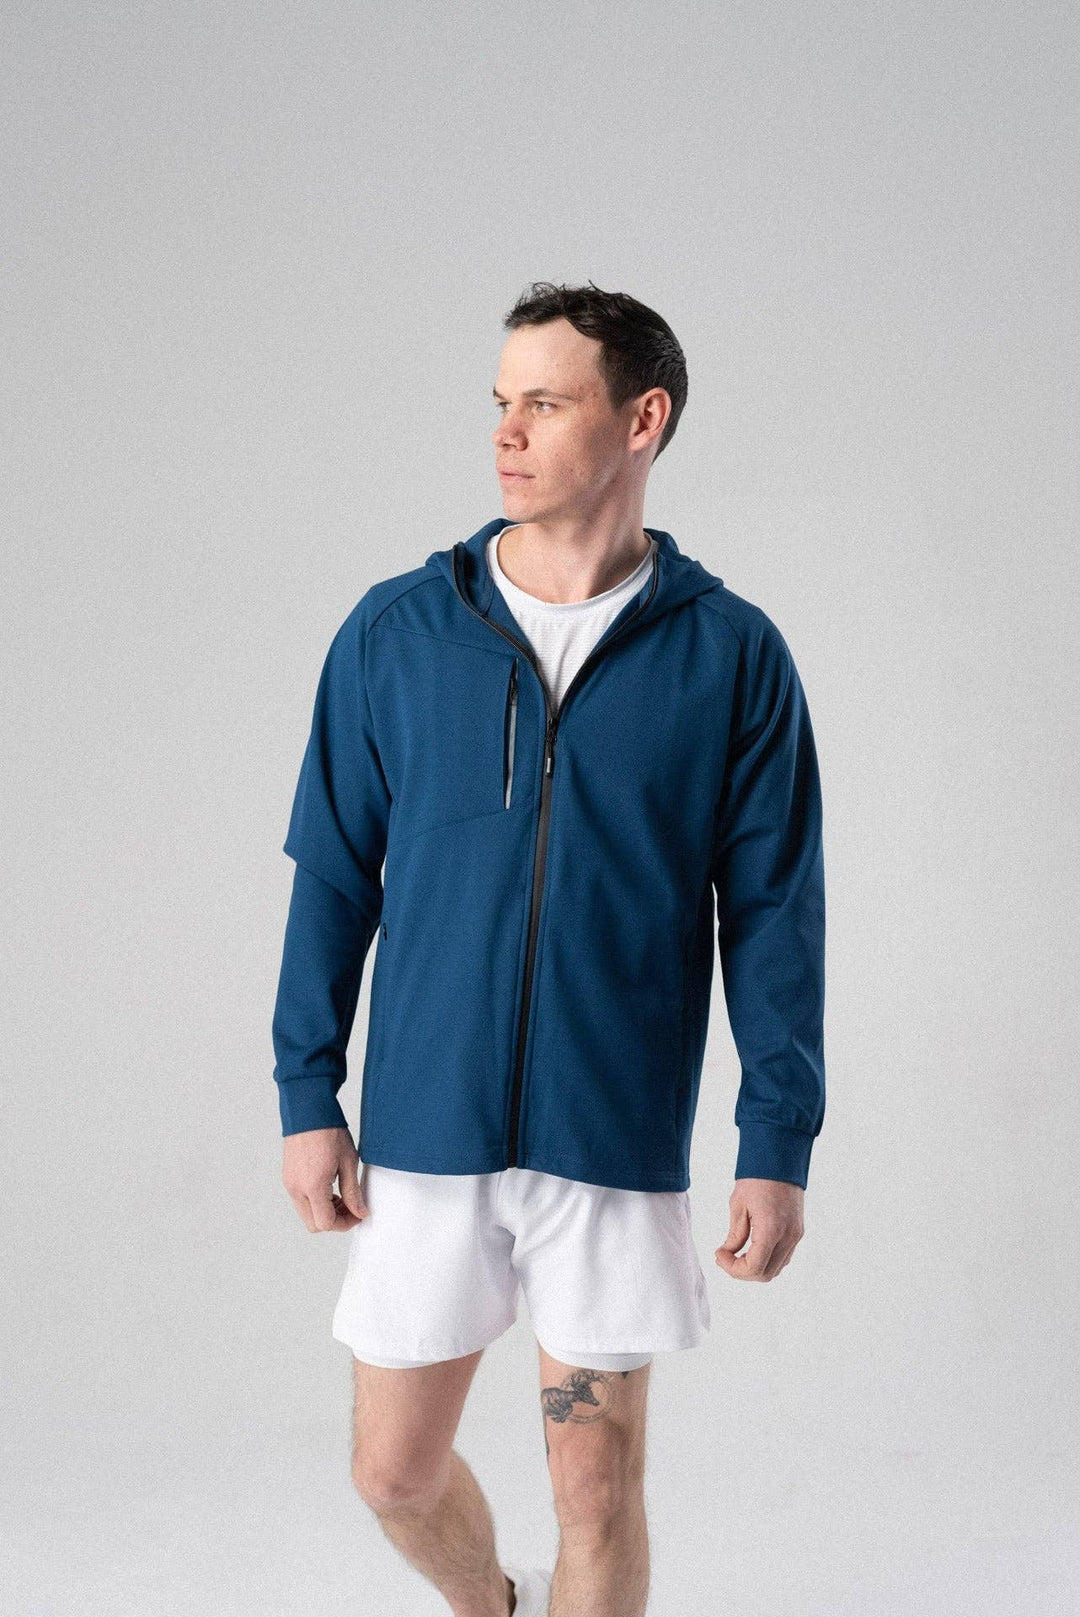 Alyth Active - Fierce hooded jacket MEN